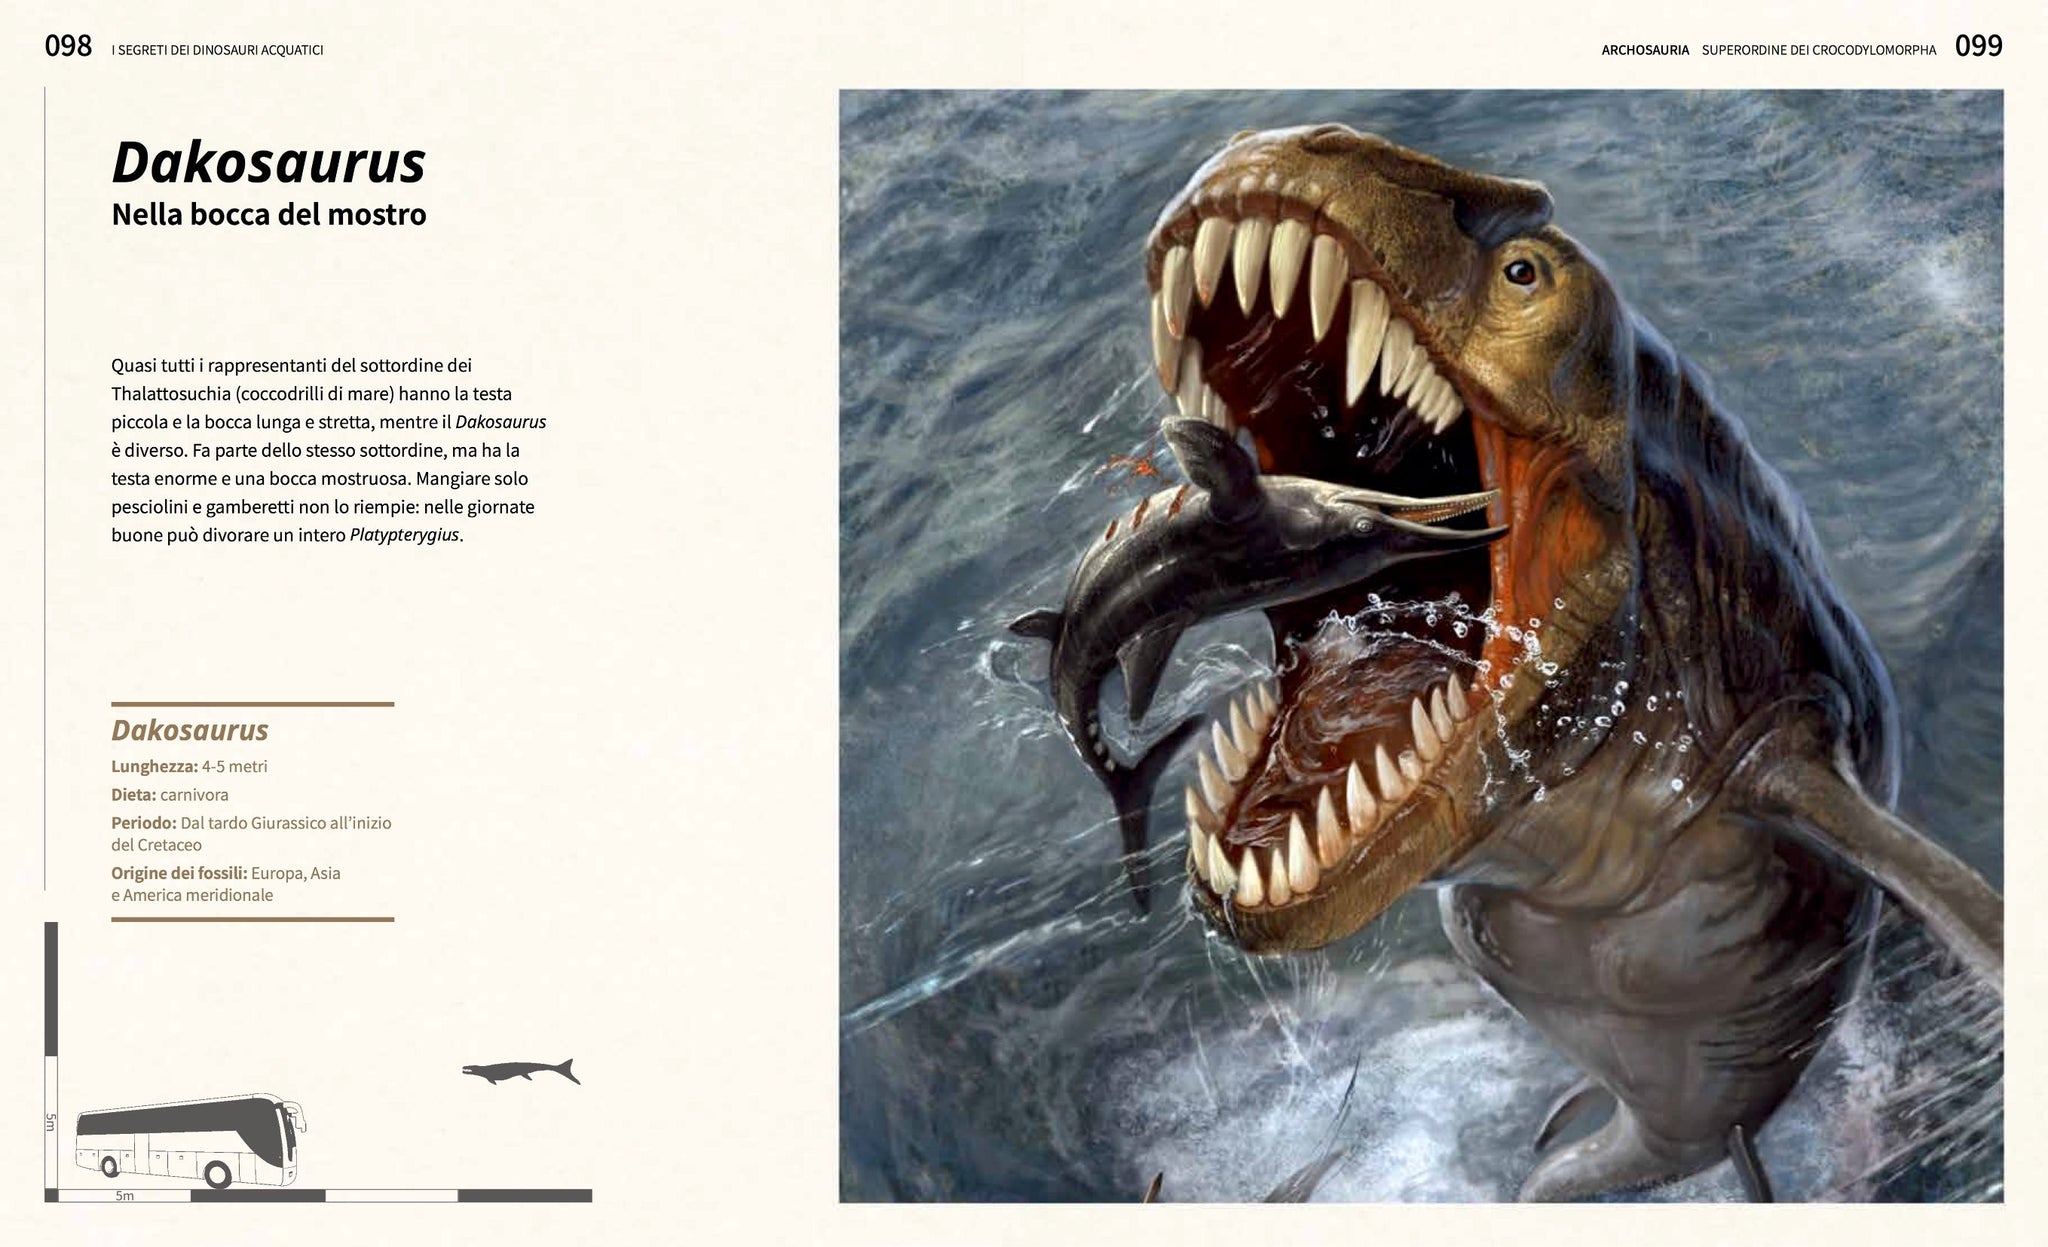 The secrets of aquatic dinosaurs